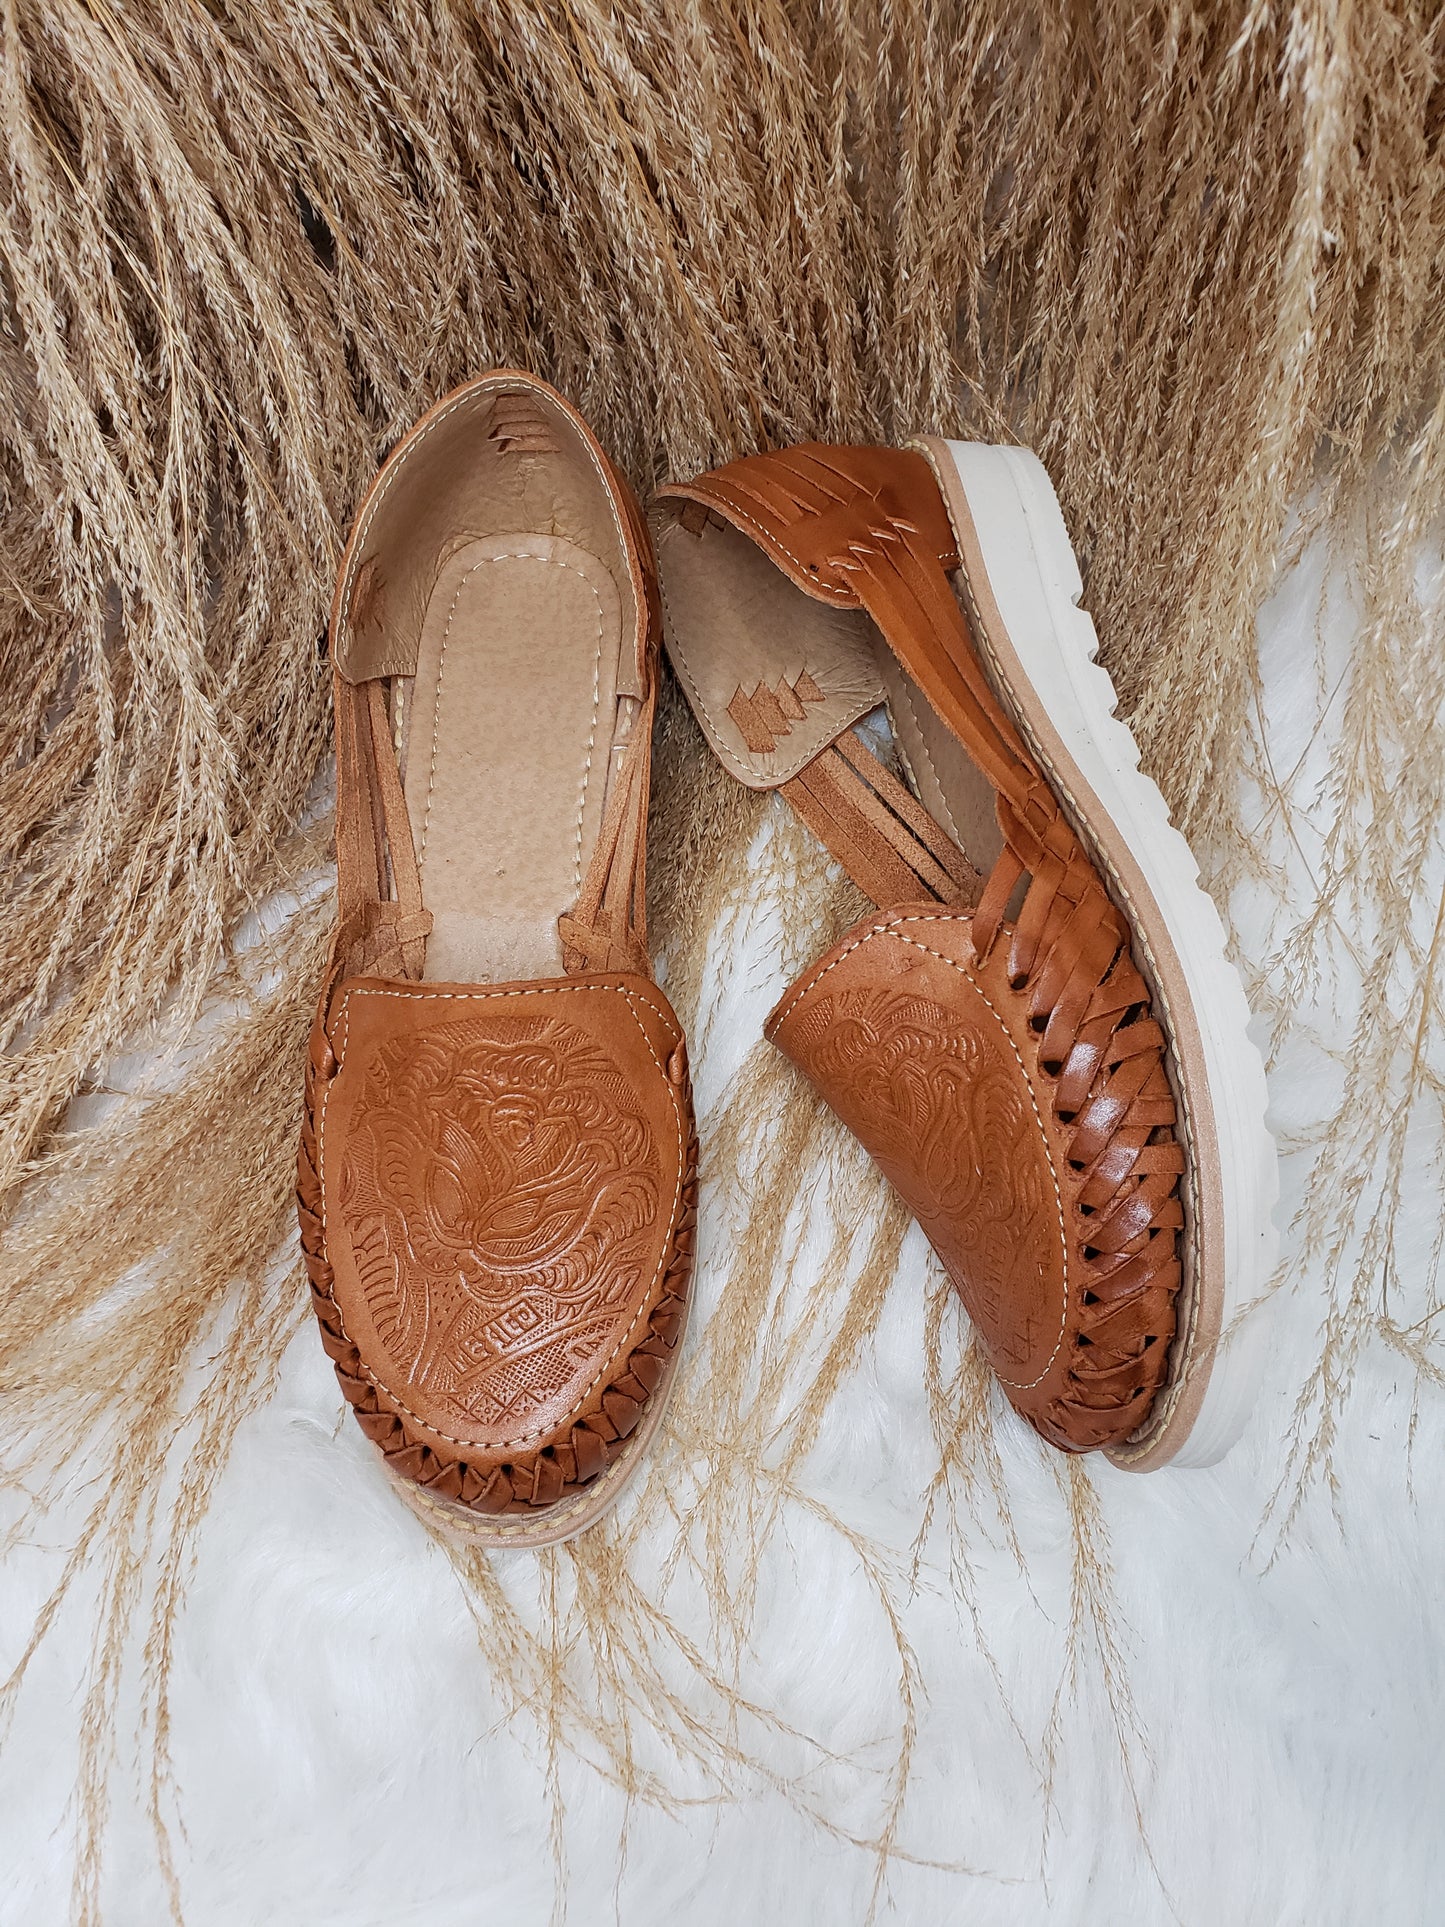 Georgina Mexican huarache sandals//Huarache mexicano//Mexican sandal//Mexican closed toe huarache//Mexican artisanal shoe